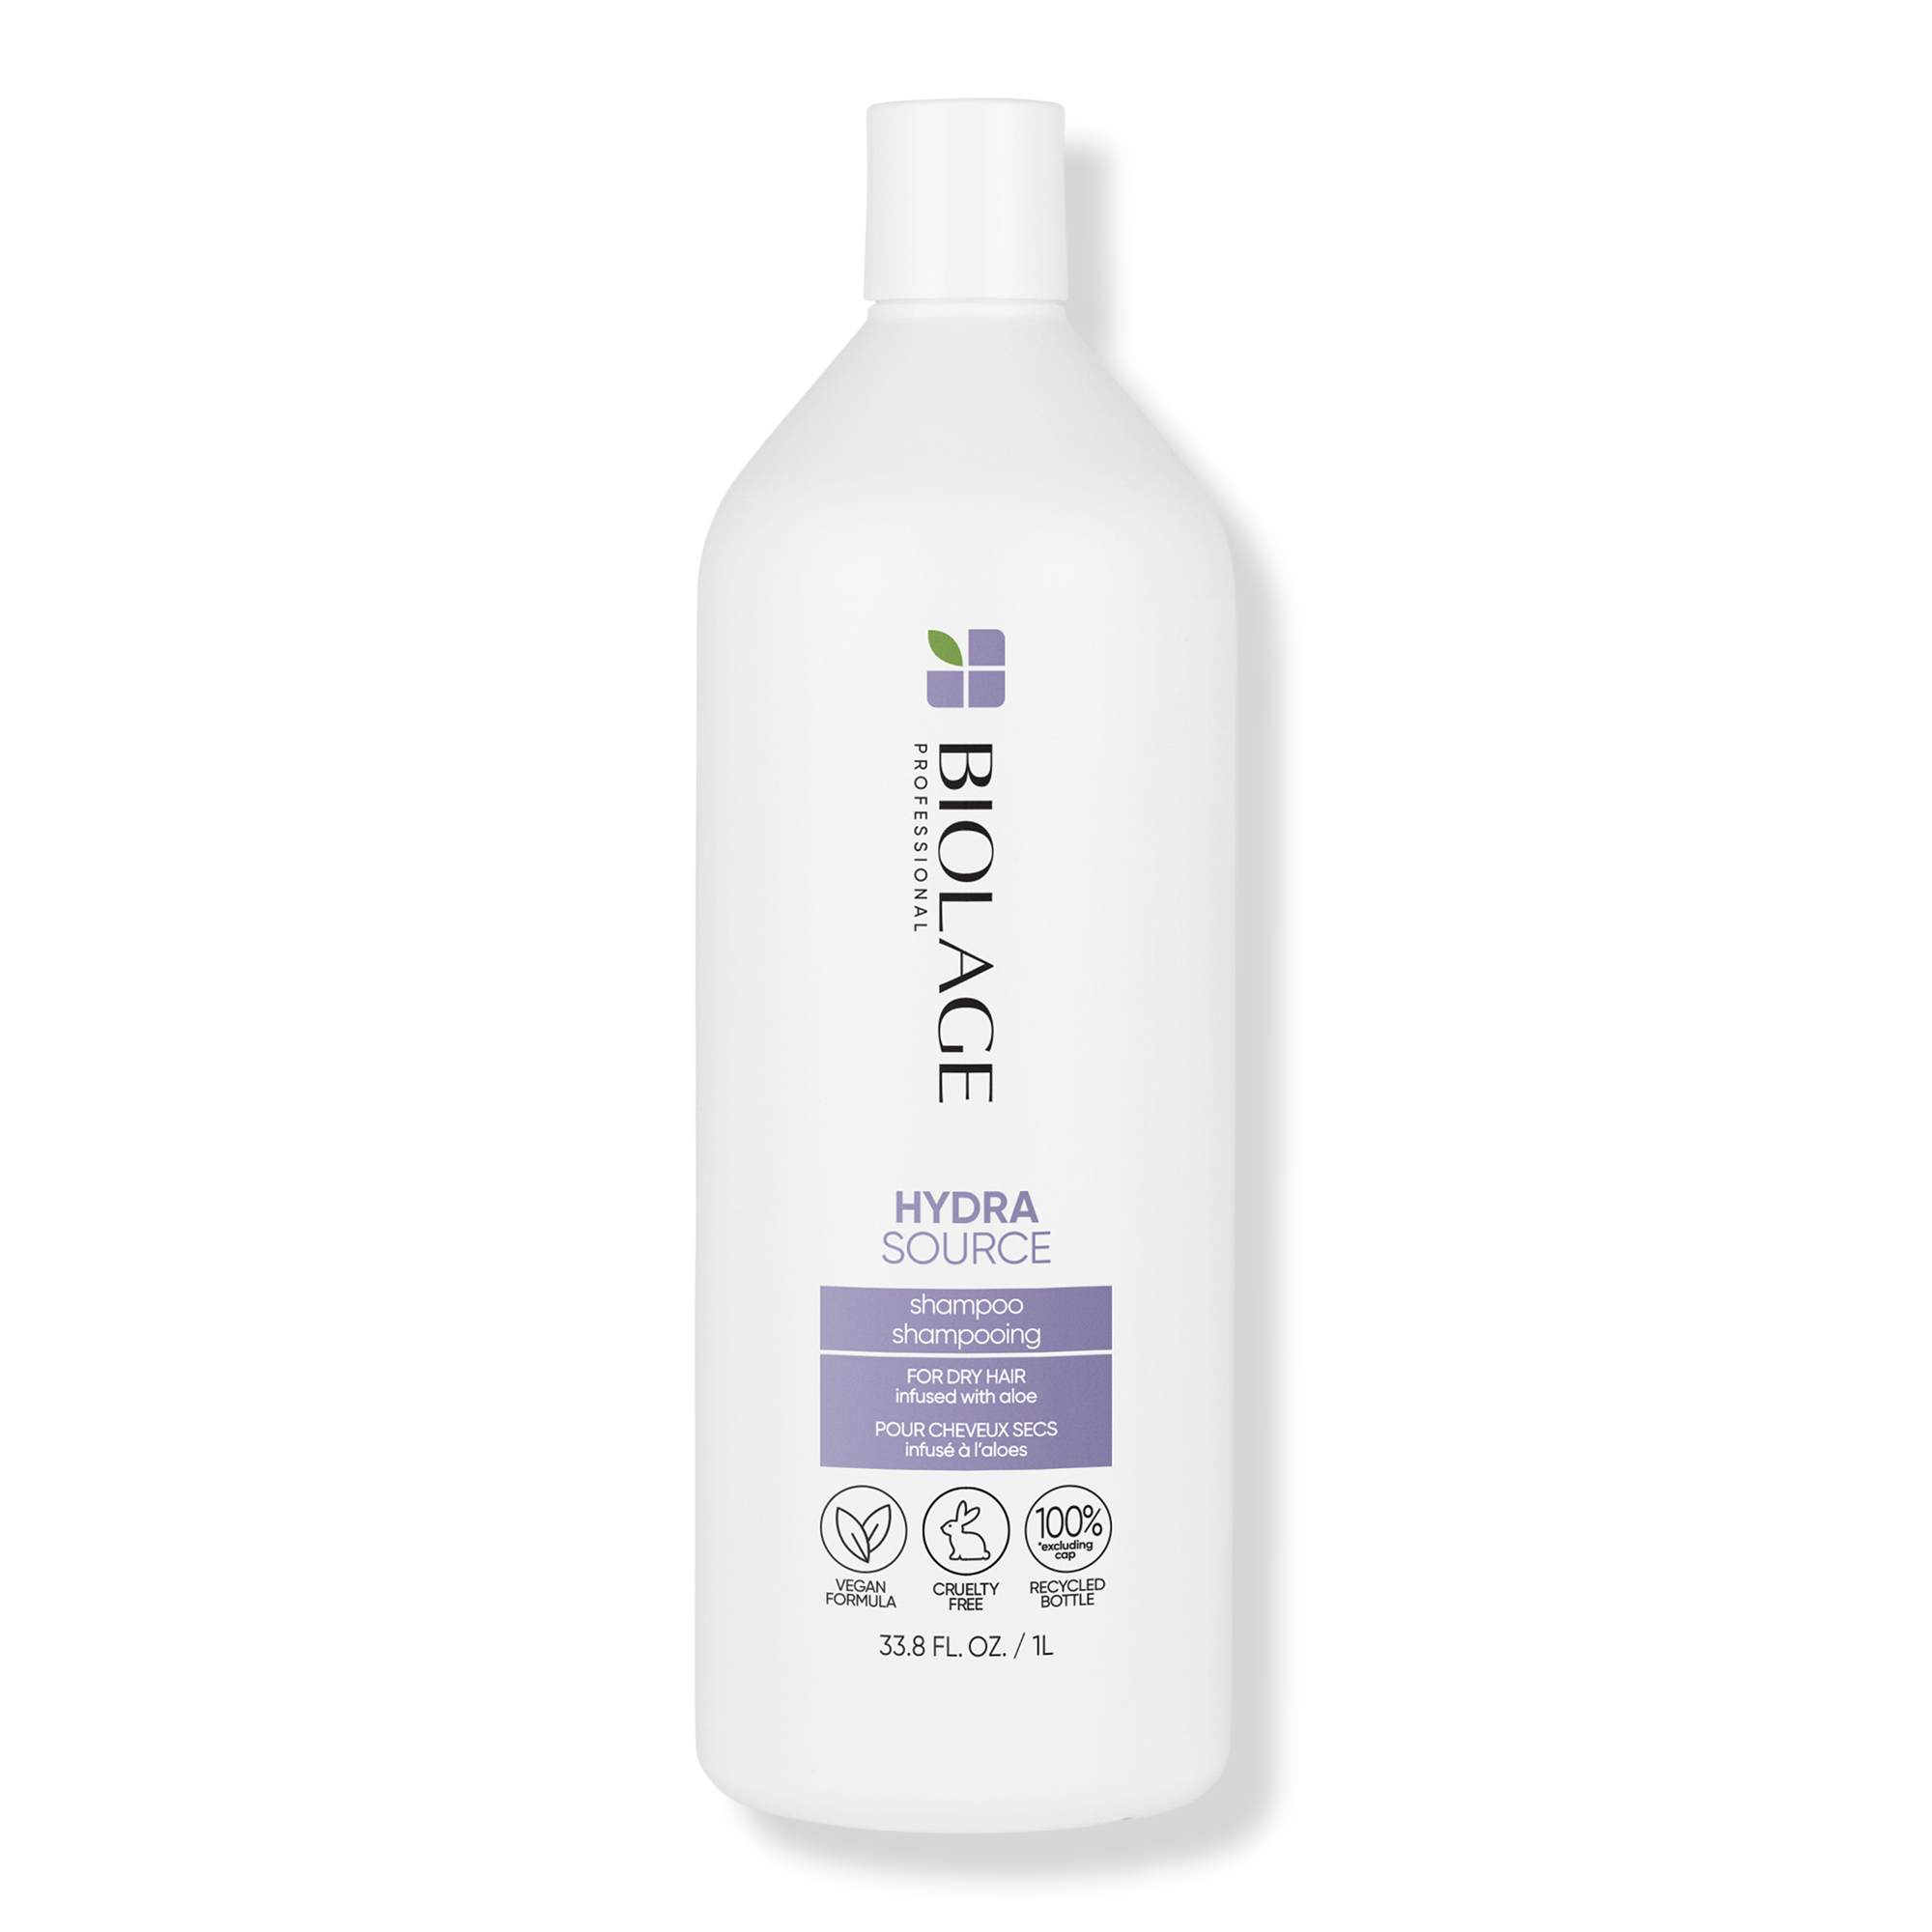 Matrix Biolage HydraSource Shampoo and HydraSource Detangling Solution Liter Duo ($76 Value) / 33OZ